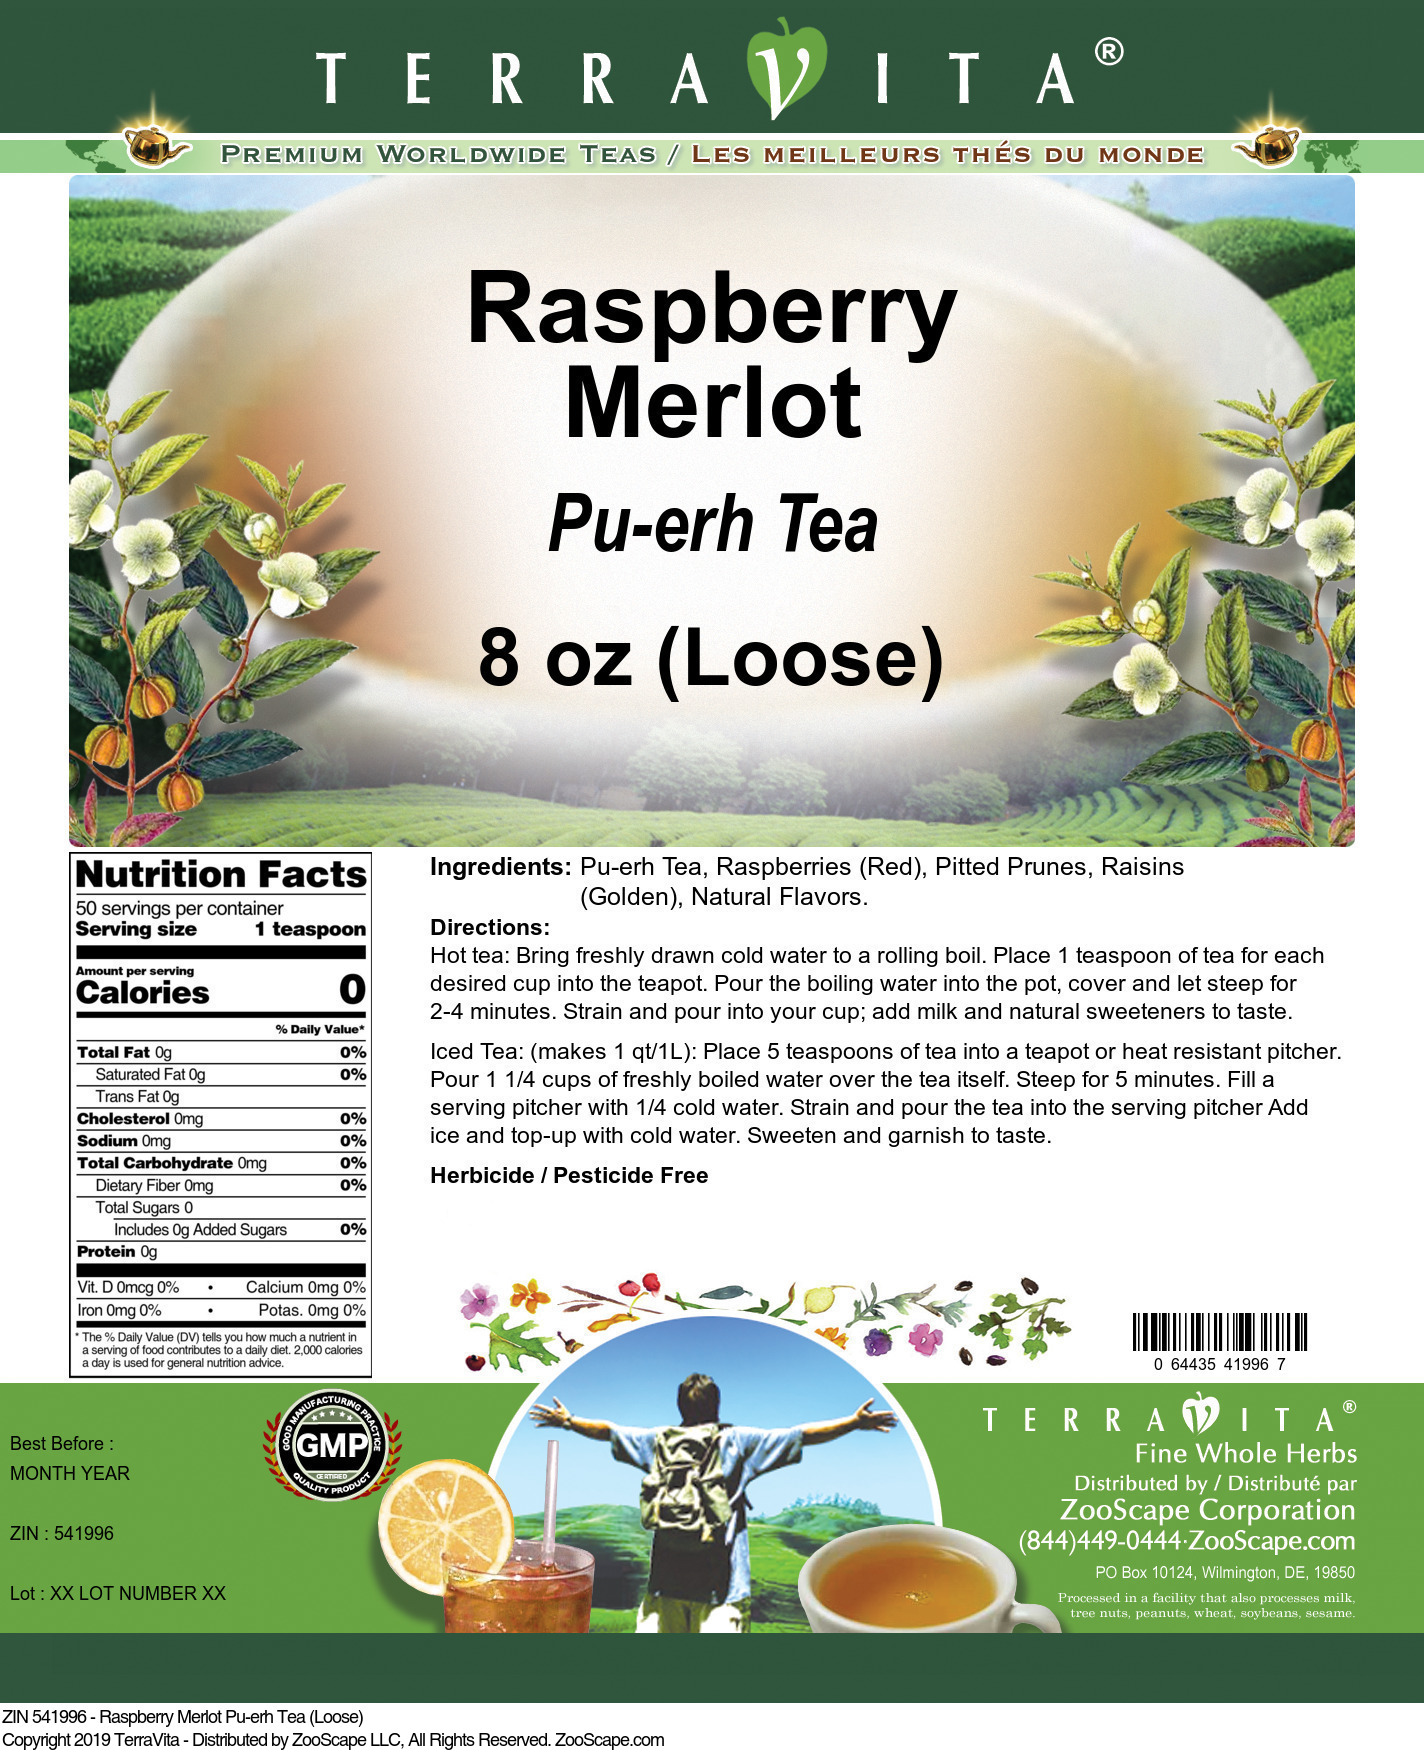 Raspberry Merlot Pu-erh Tea (Loose) - Label